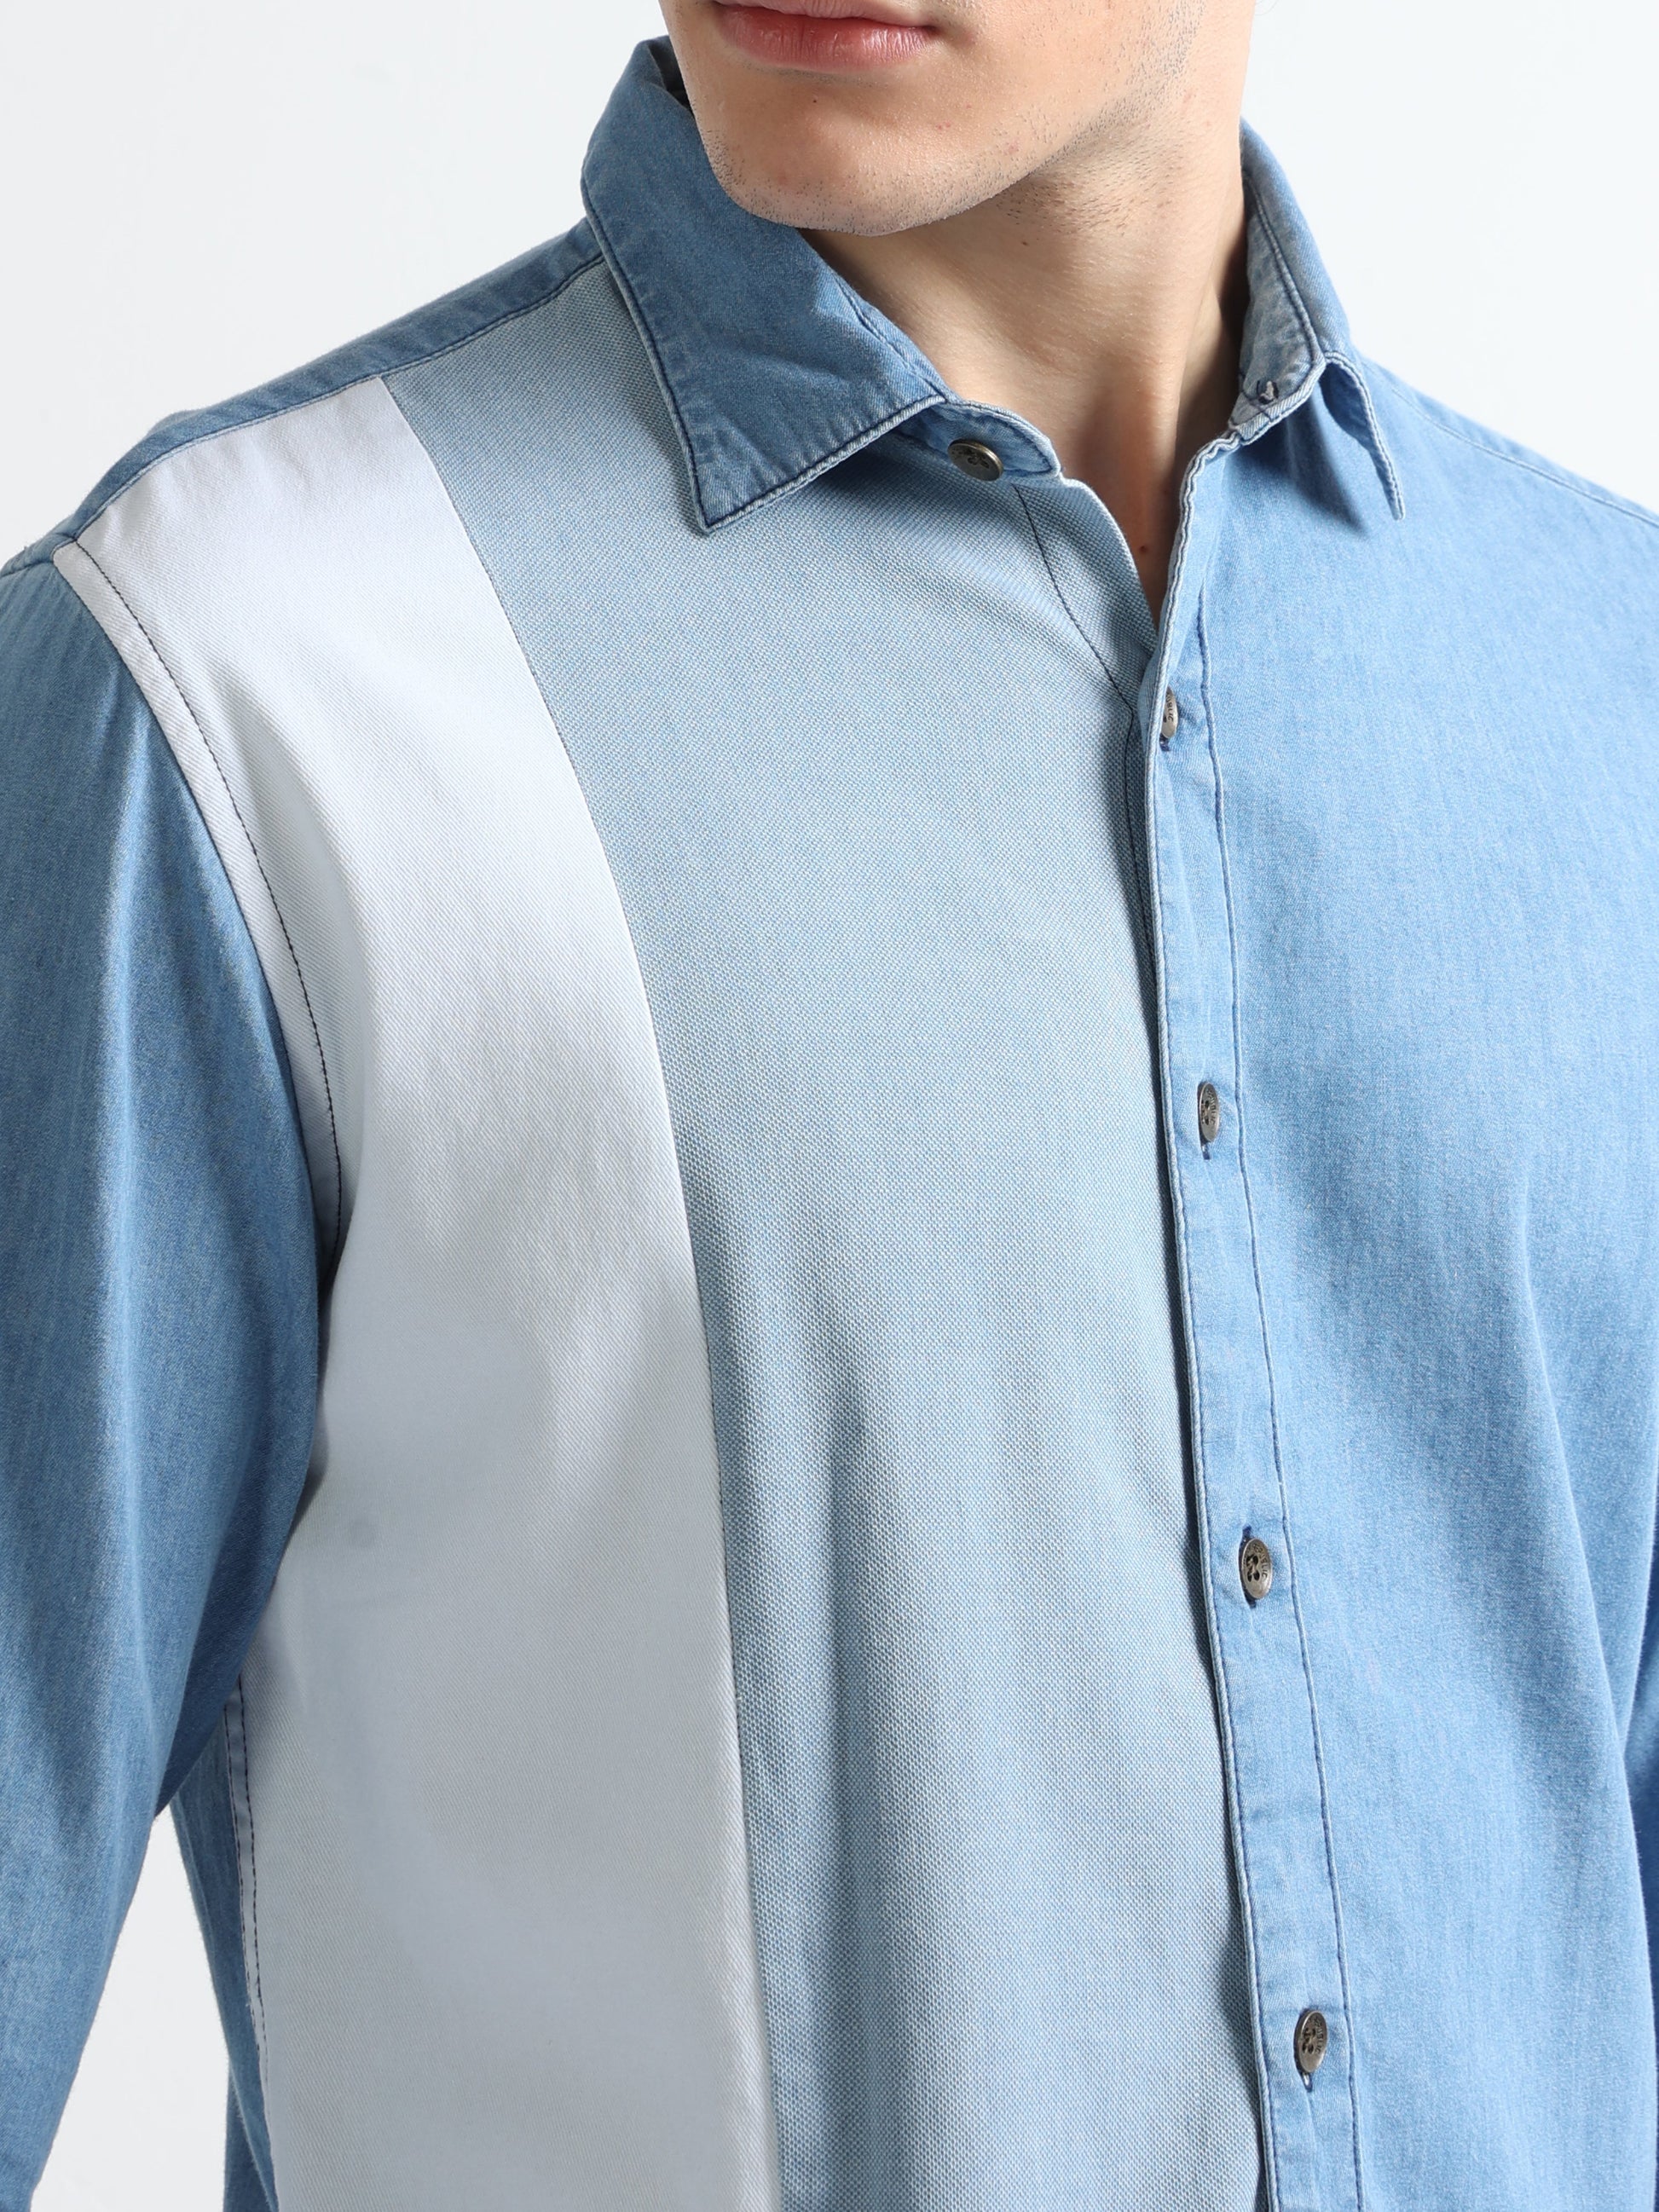 Buy Casual Color Block Ice Blue Denim Shirt Online.